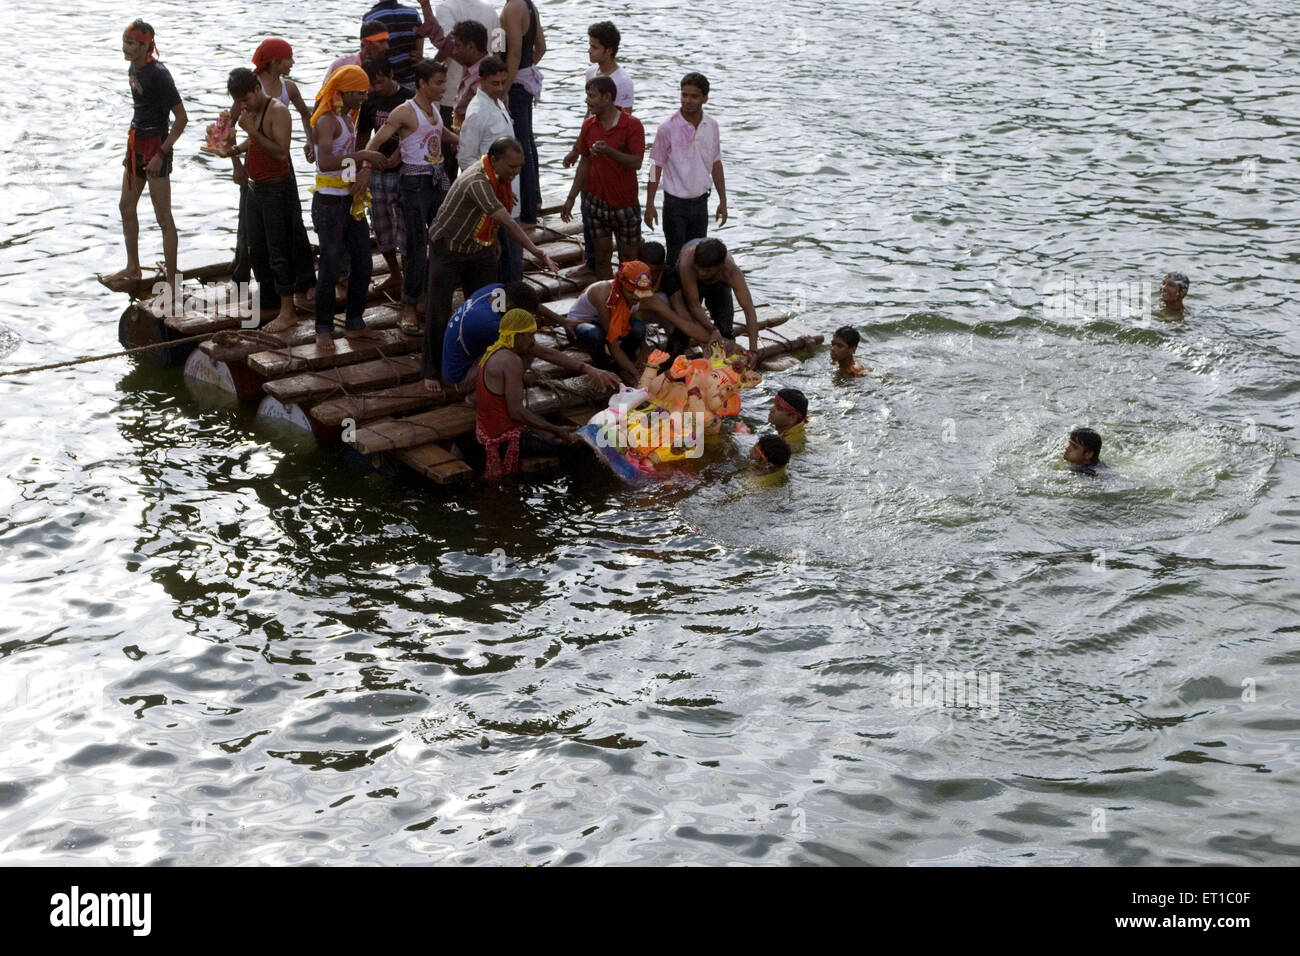 Freiwillige tragen Ganpati auf Floß in Gulabsagar Visarjan Jodhpur Rajasthan Indien Asien Stockfoto